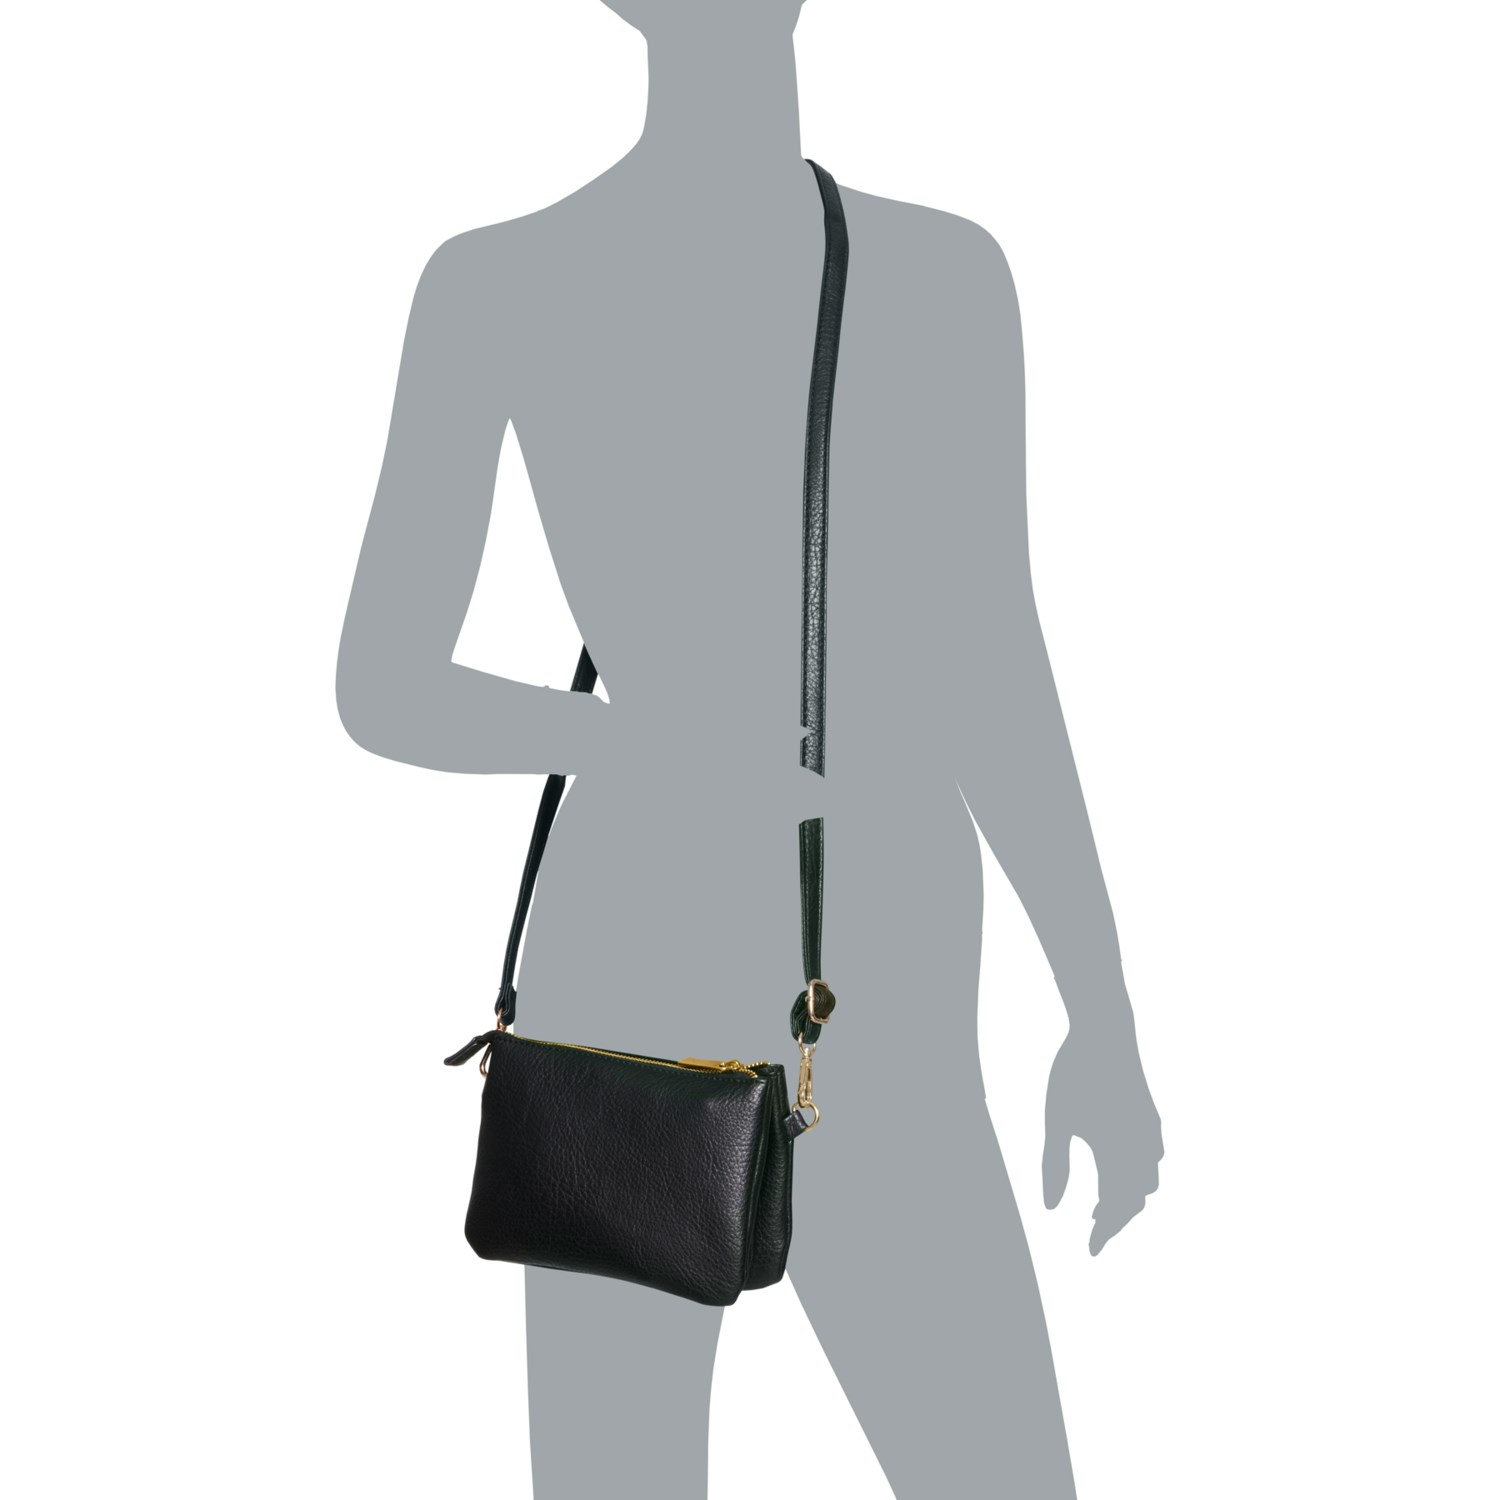 METRO MUSE Calin Collection Small Zip Crossbody Bag (For Women) - Save 46%